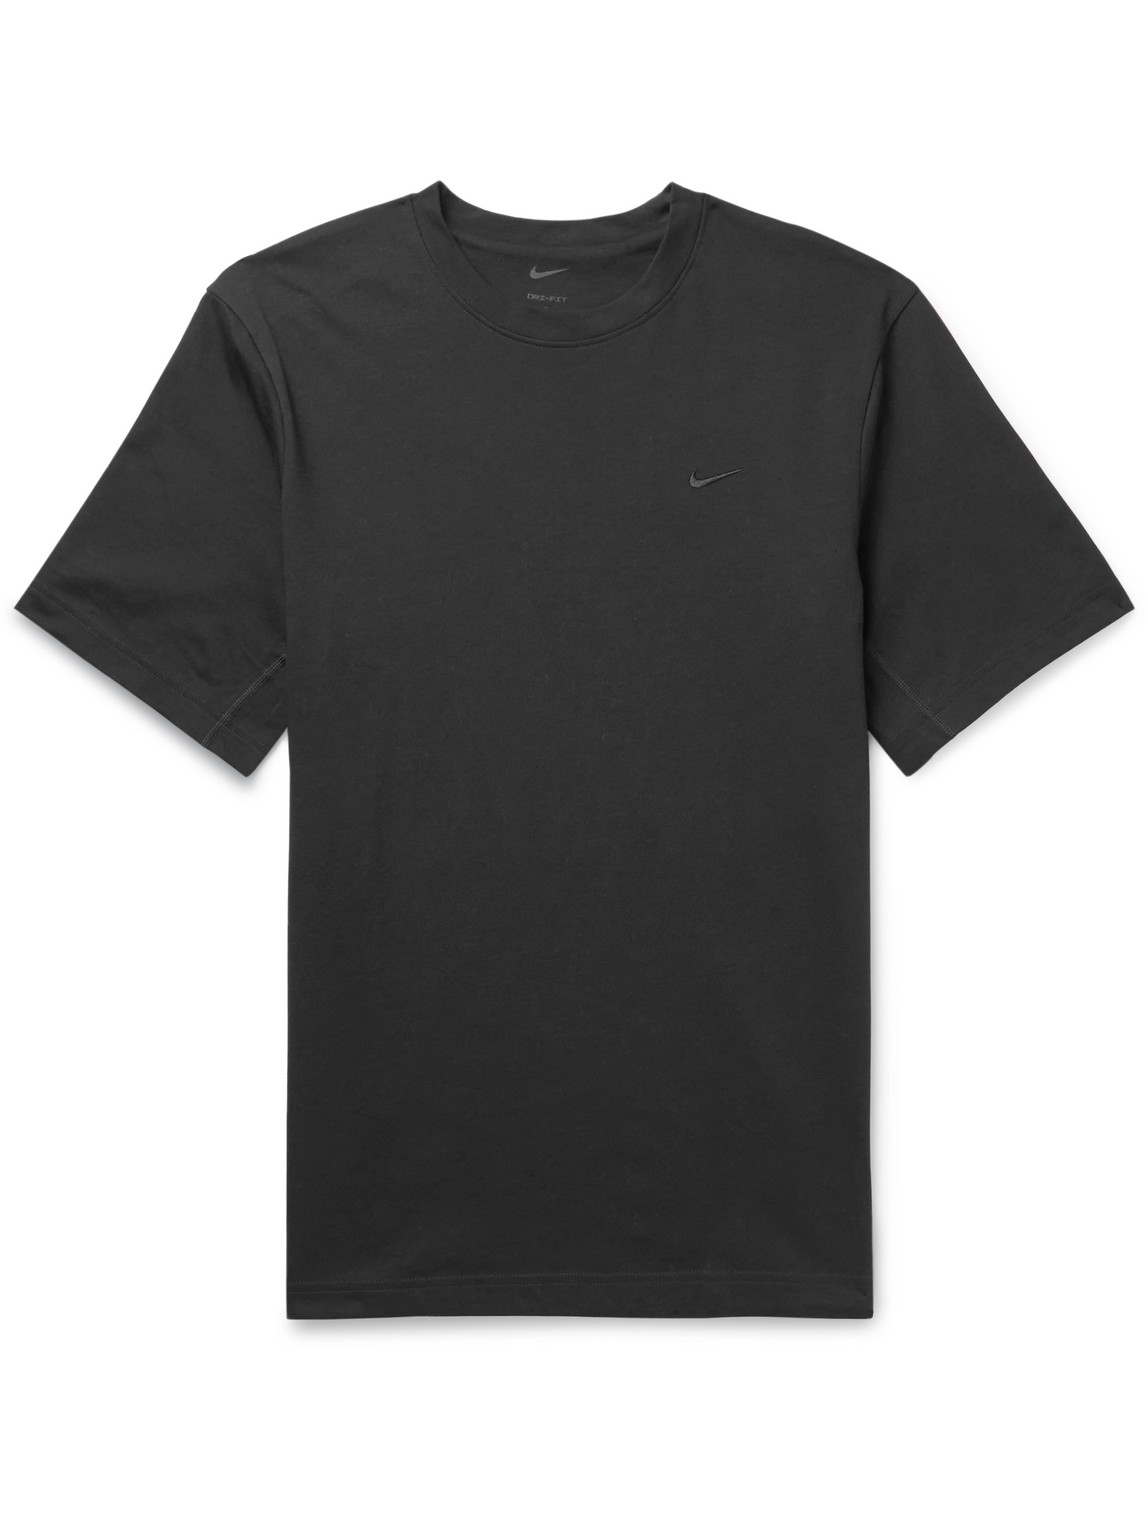 Primary Cotton-Blend Dri-FIT T-Shirt